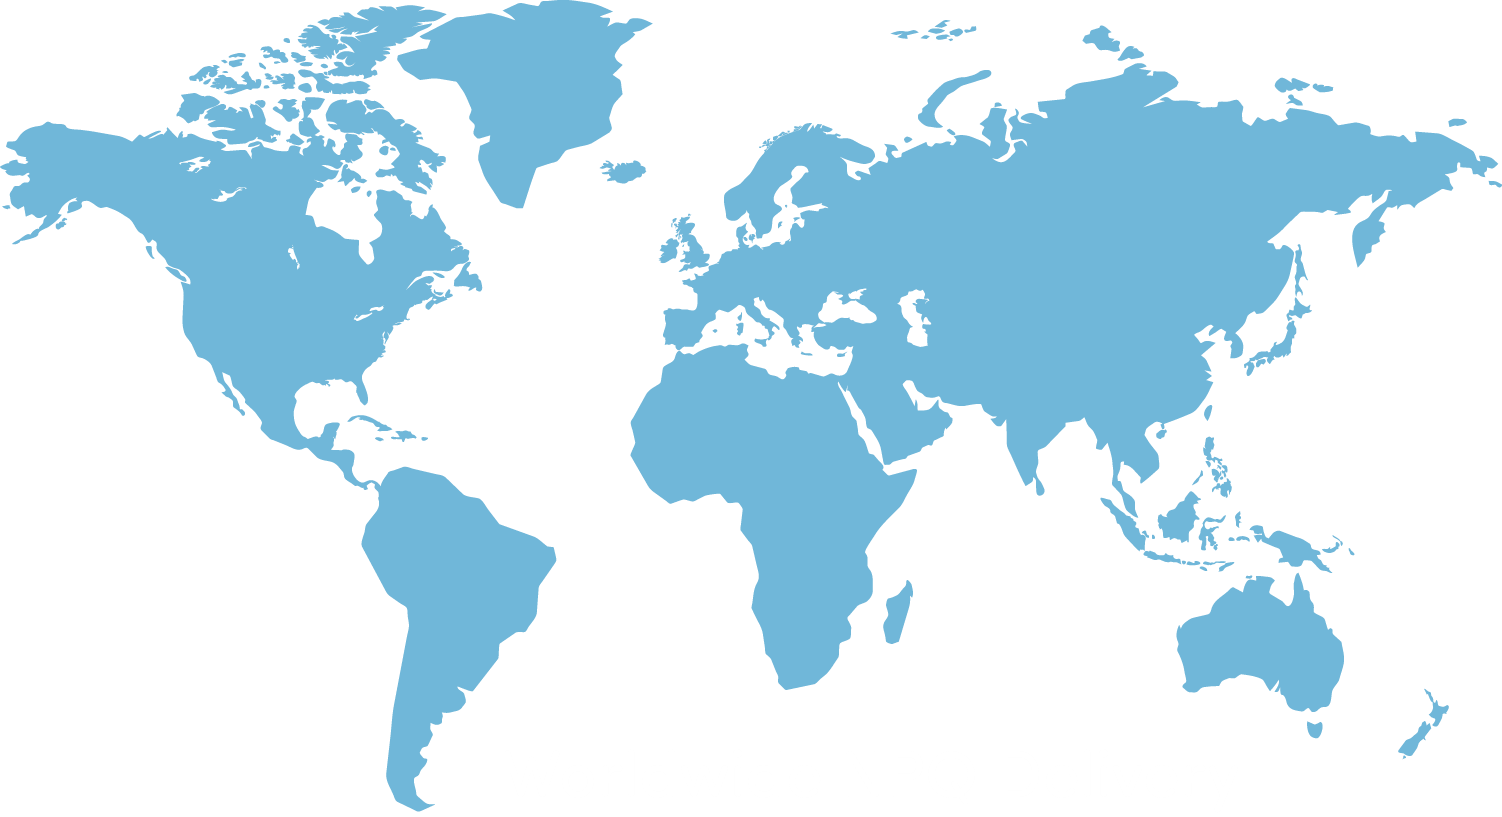 Worldwide NPQ delivery for map international schools